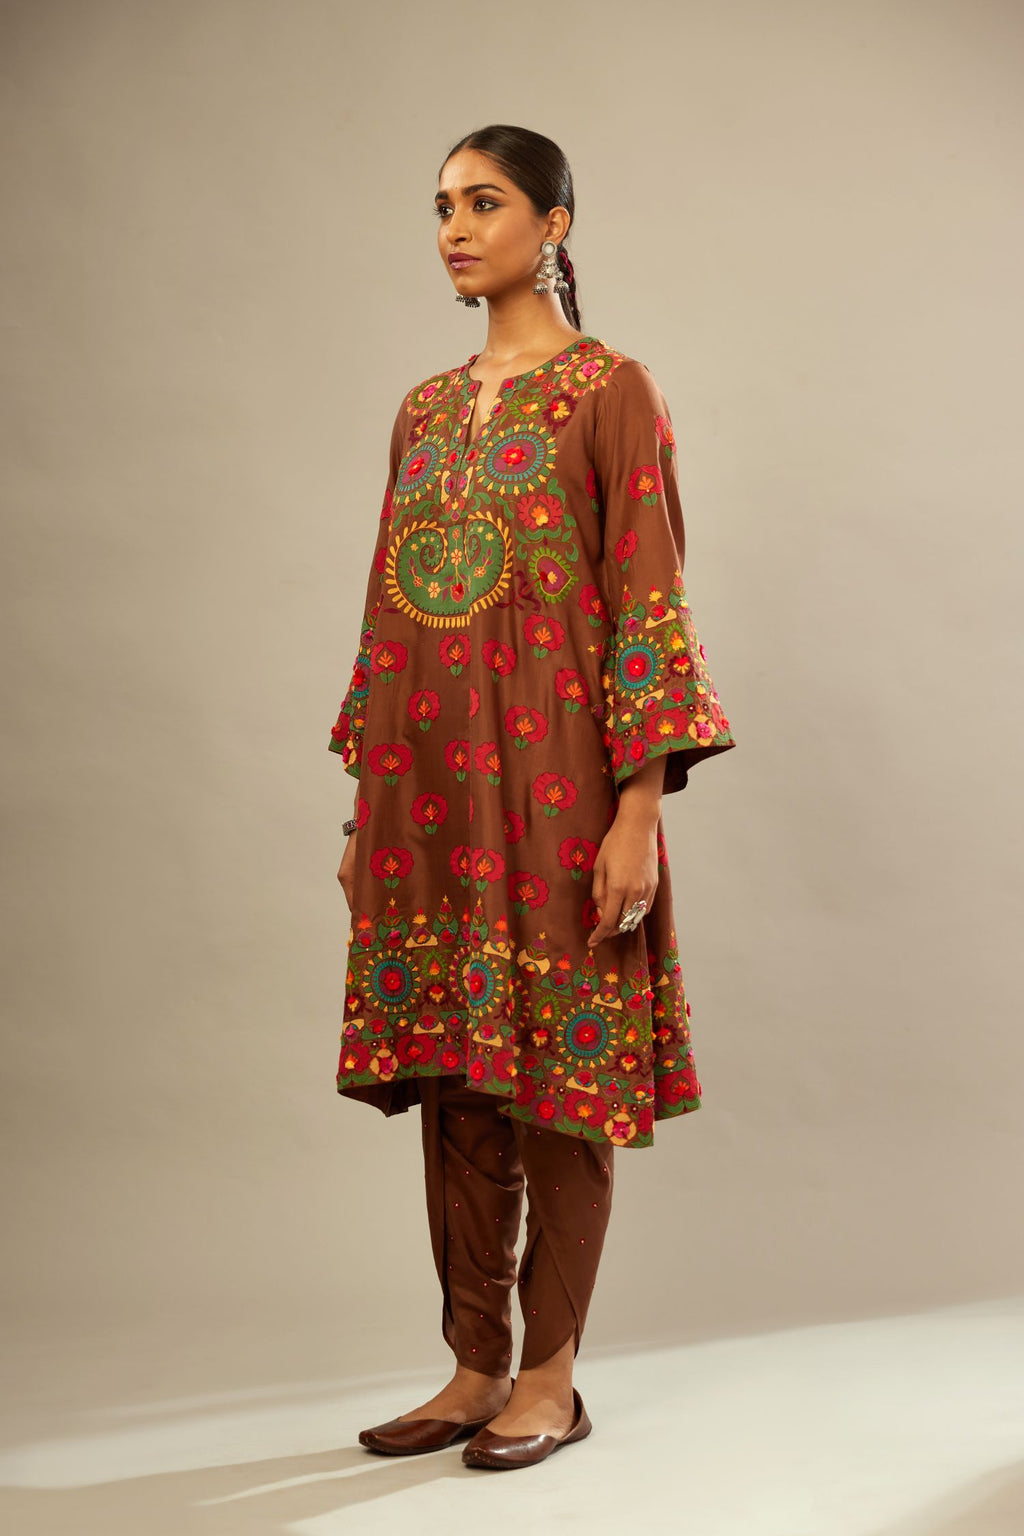 Brown silk straight hem mid-length abha style kurta set with bold appliqué embroidery along with multi-colored aari thread work and tassels.